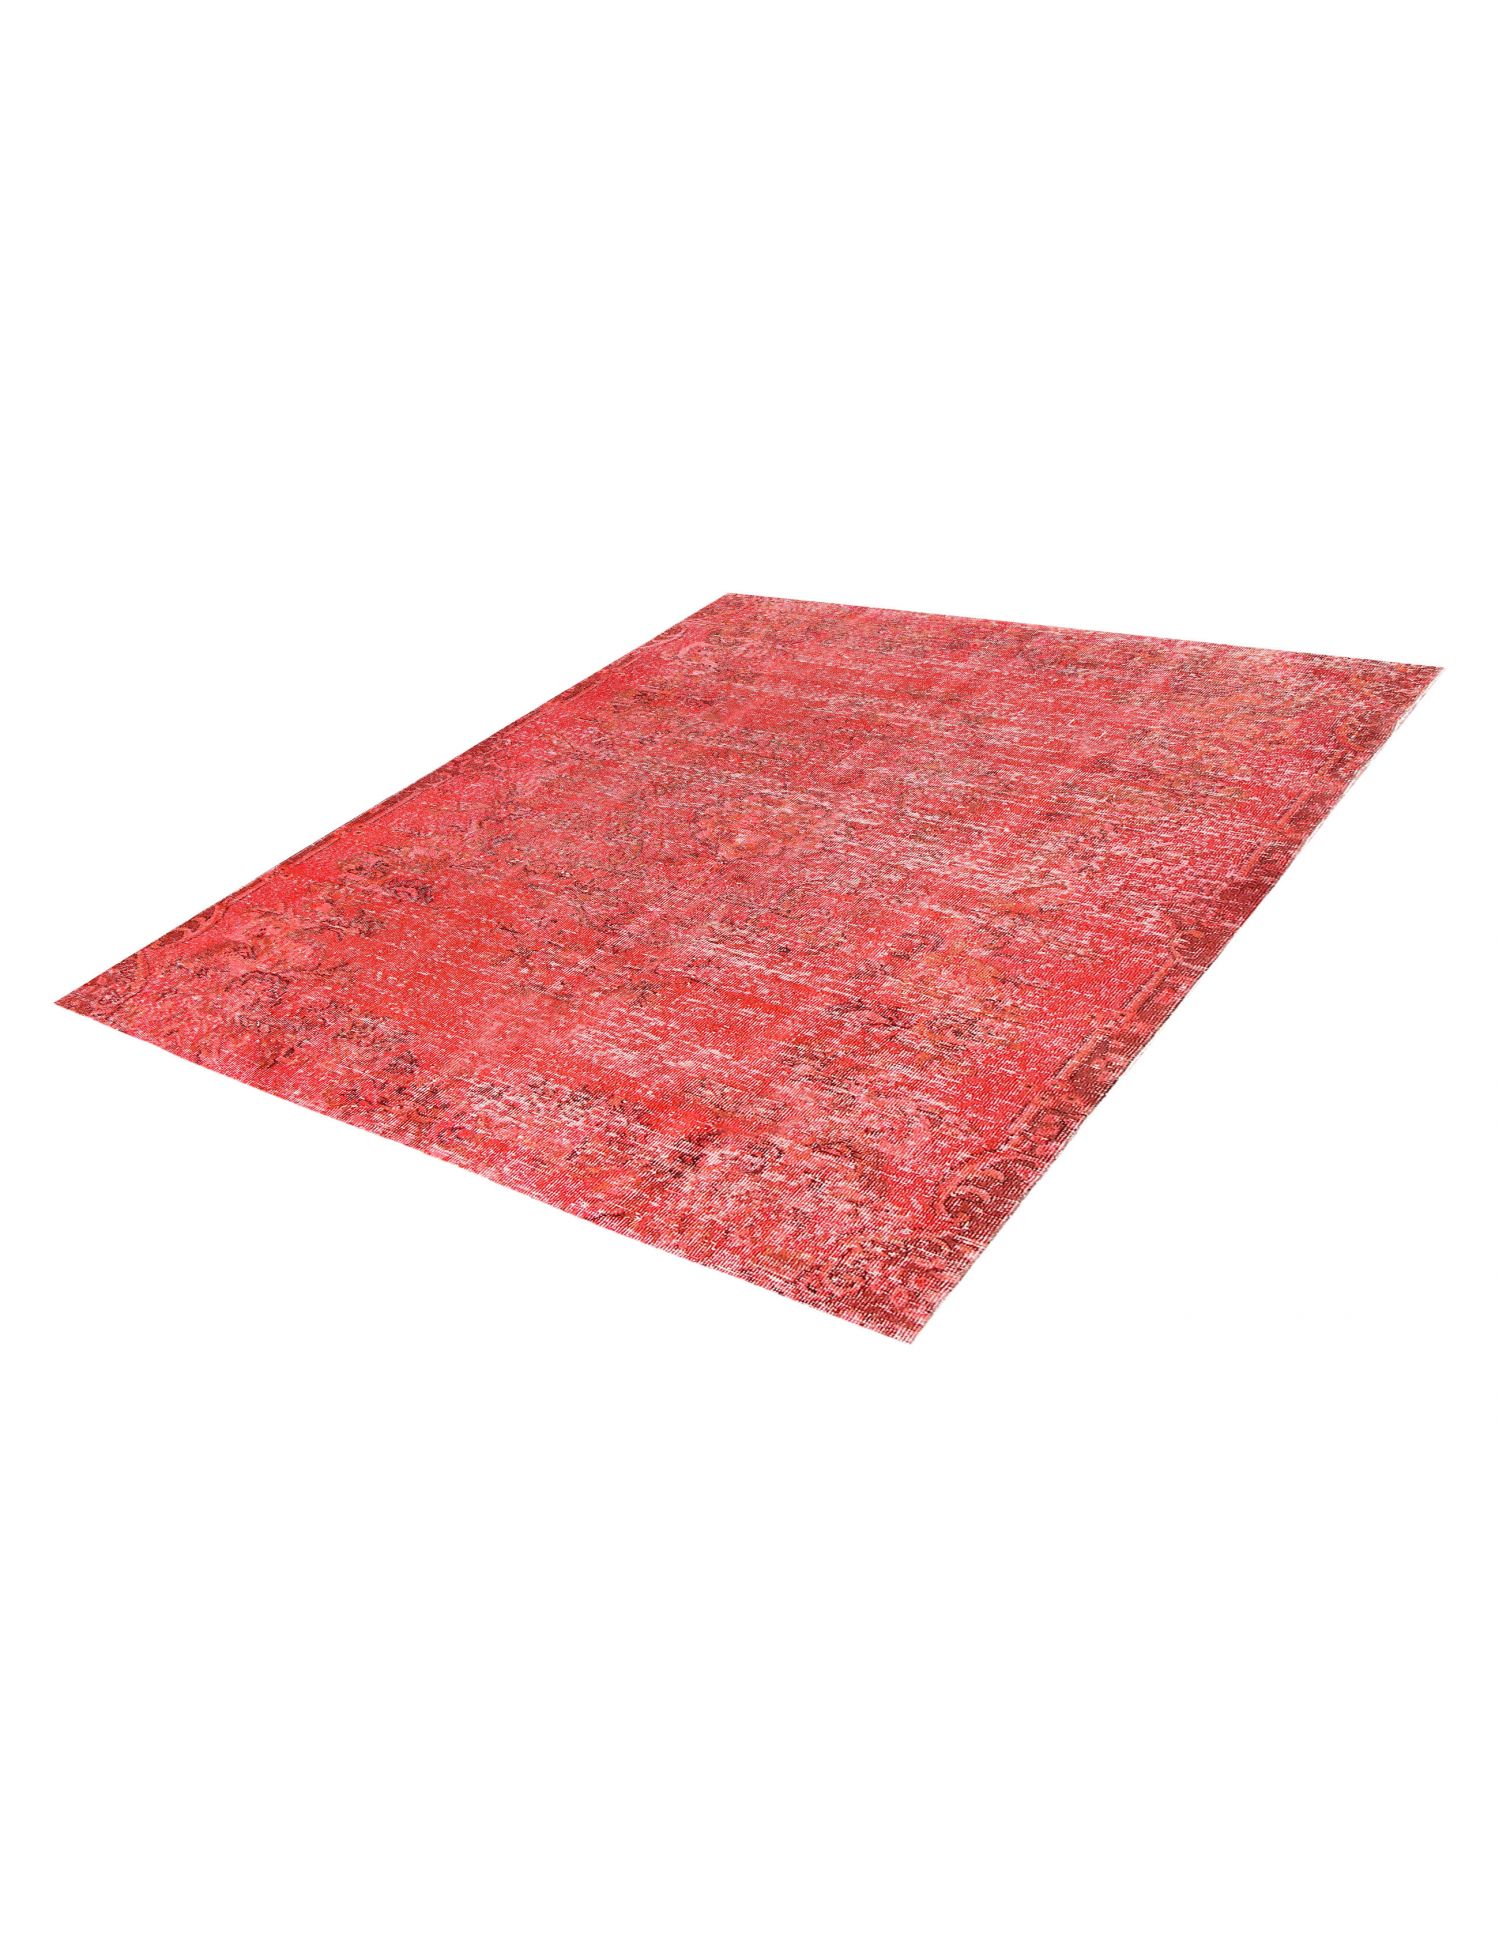 Quadrat Vintage Teppich  rot <br/>170 x 170 cm